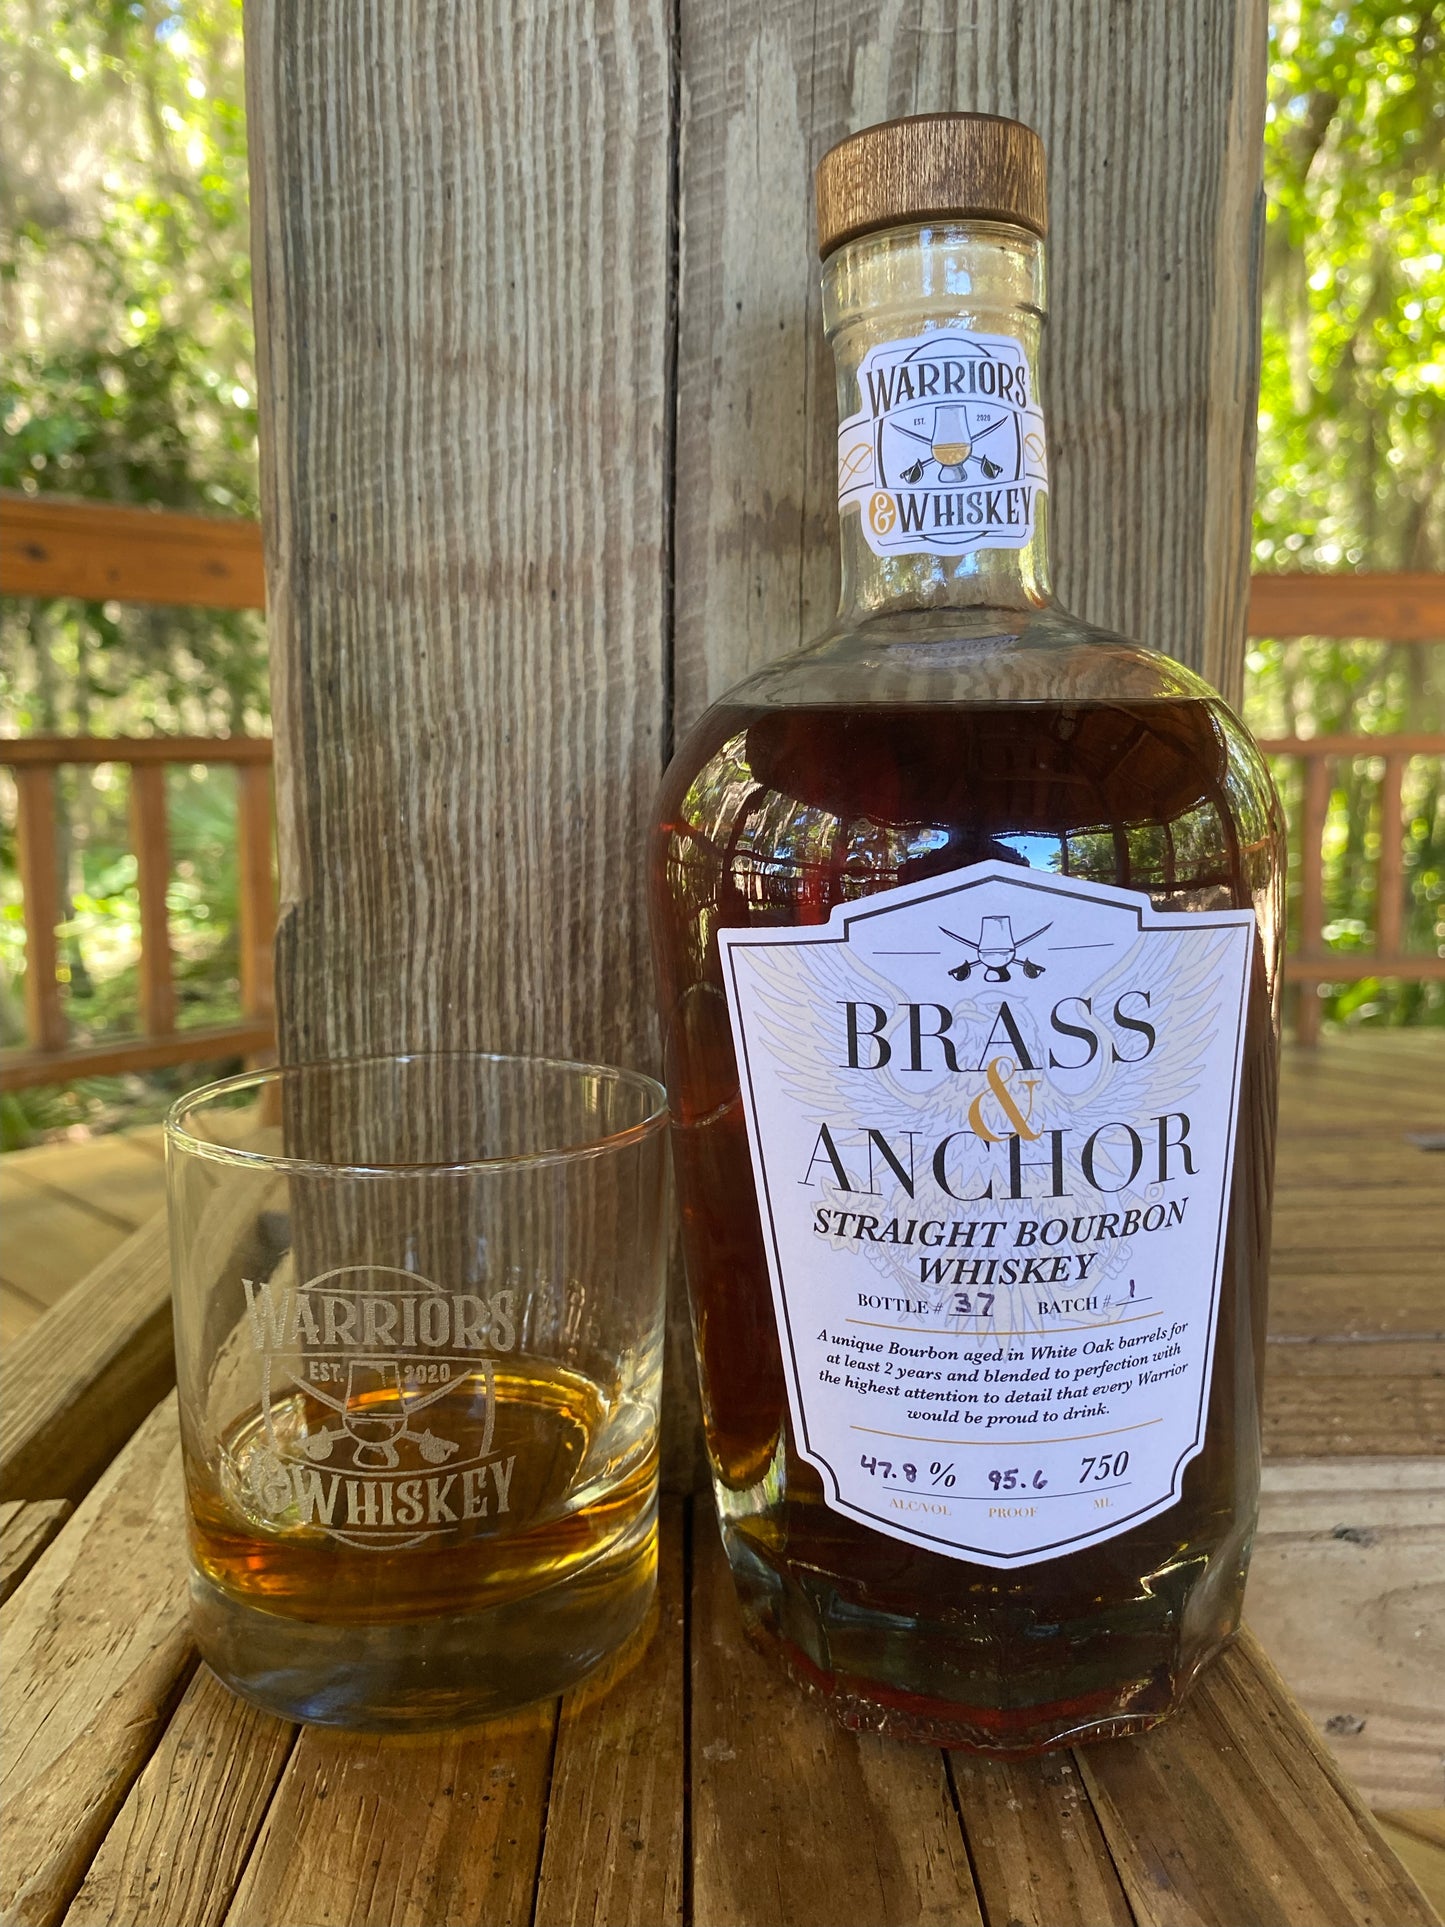 Brass & Anchor Straight Bourbon Whiskey